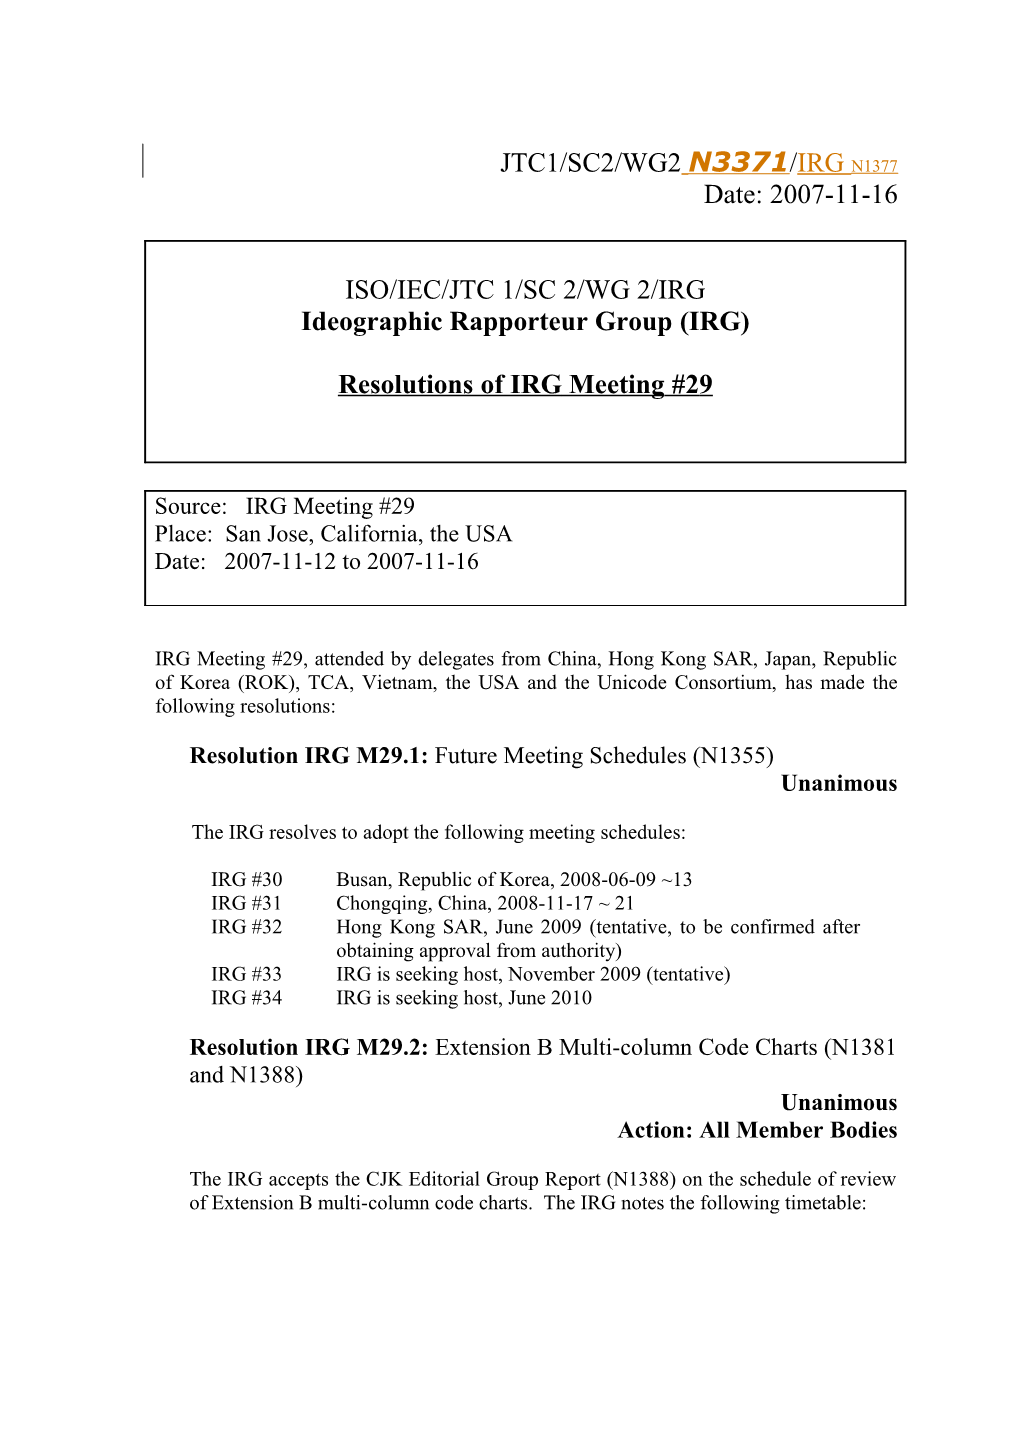 Resolution IRG M29.1: Future Meeting Schedules (N1355)